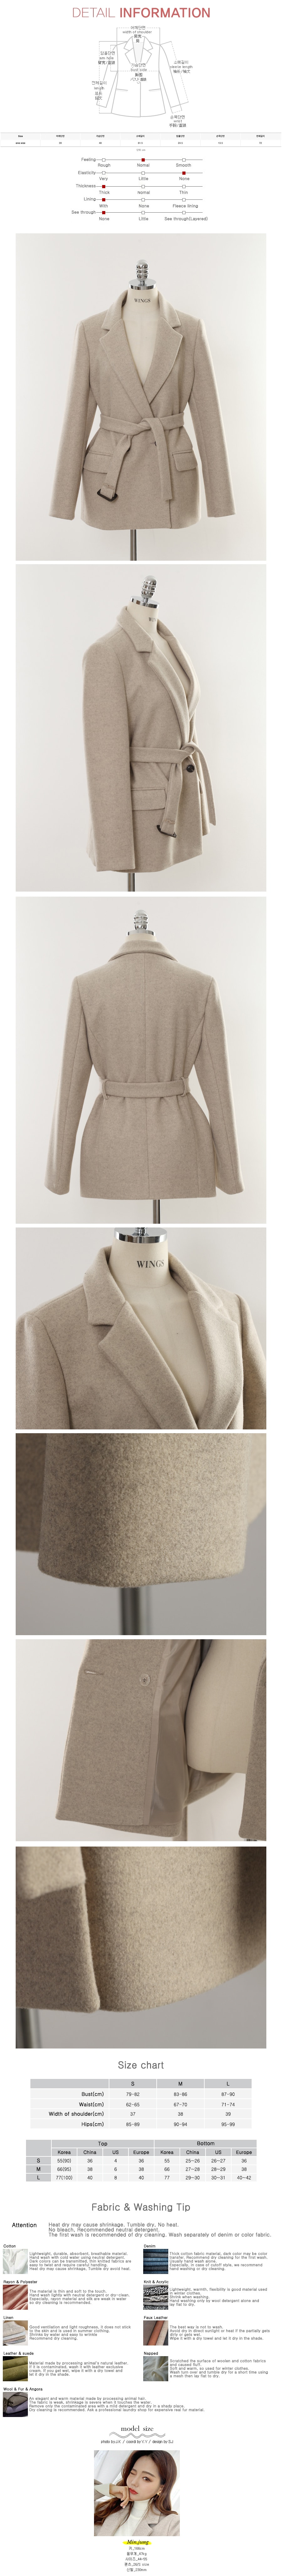 SSUMPART Belted Wool-Blend Jacket #Beige One Size(36-38)